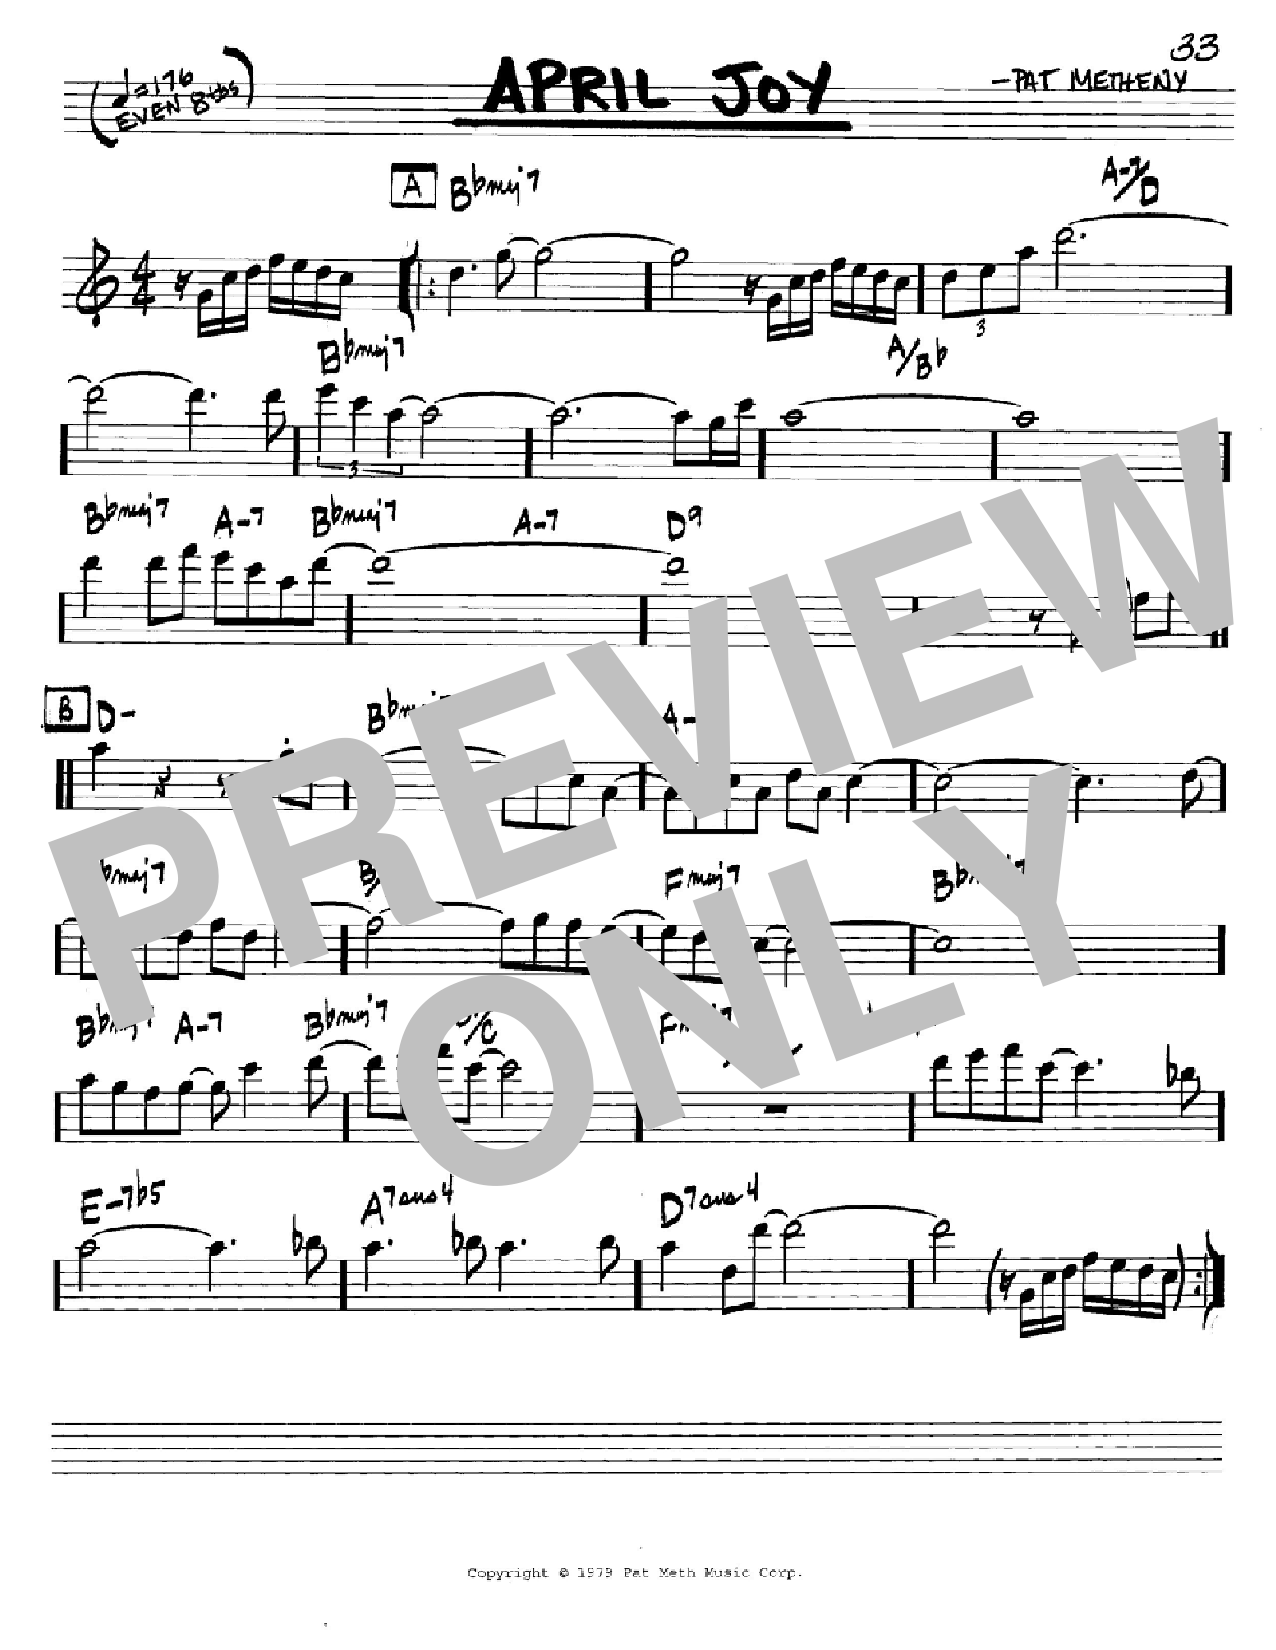 Pat Metheny April Joy Sheet Music Notes & Chords for Real Book - Melody & Chords - Bb Instruments - Download or Print PDF